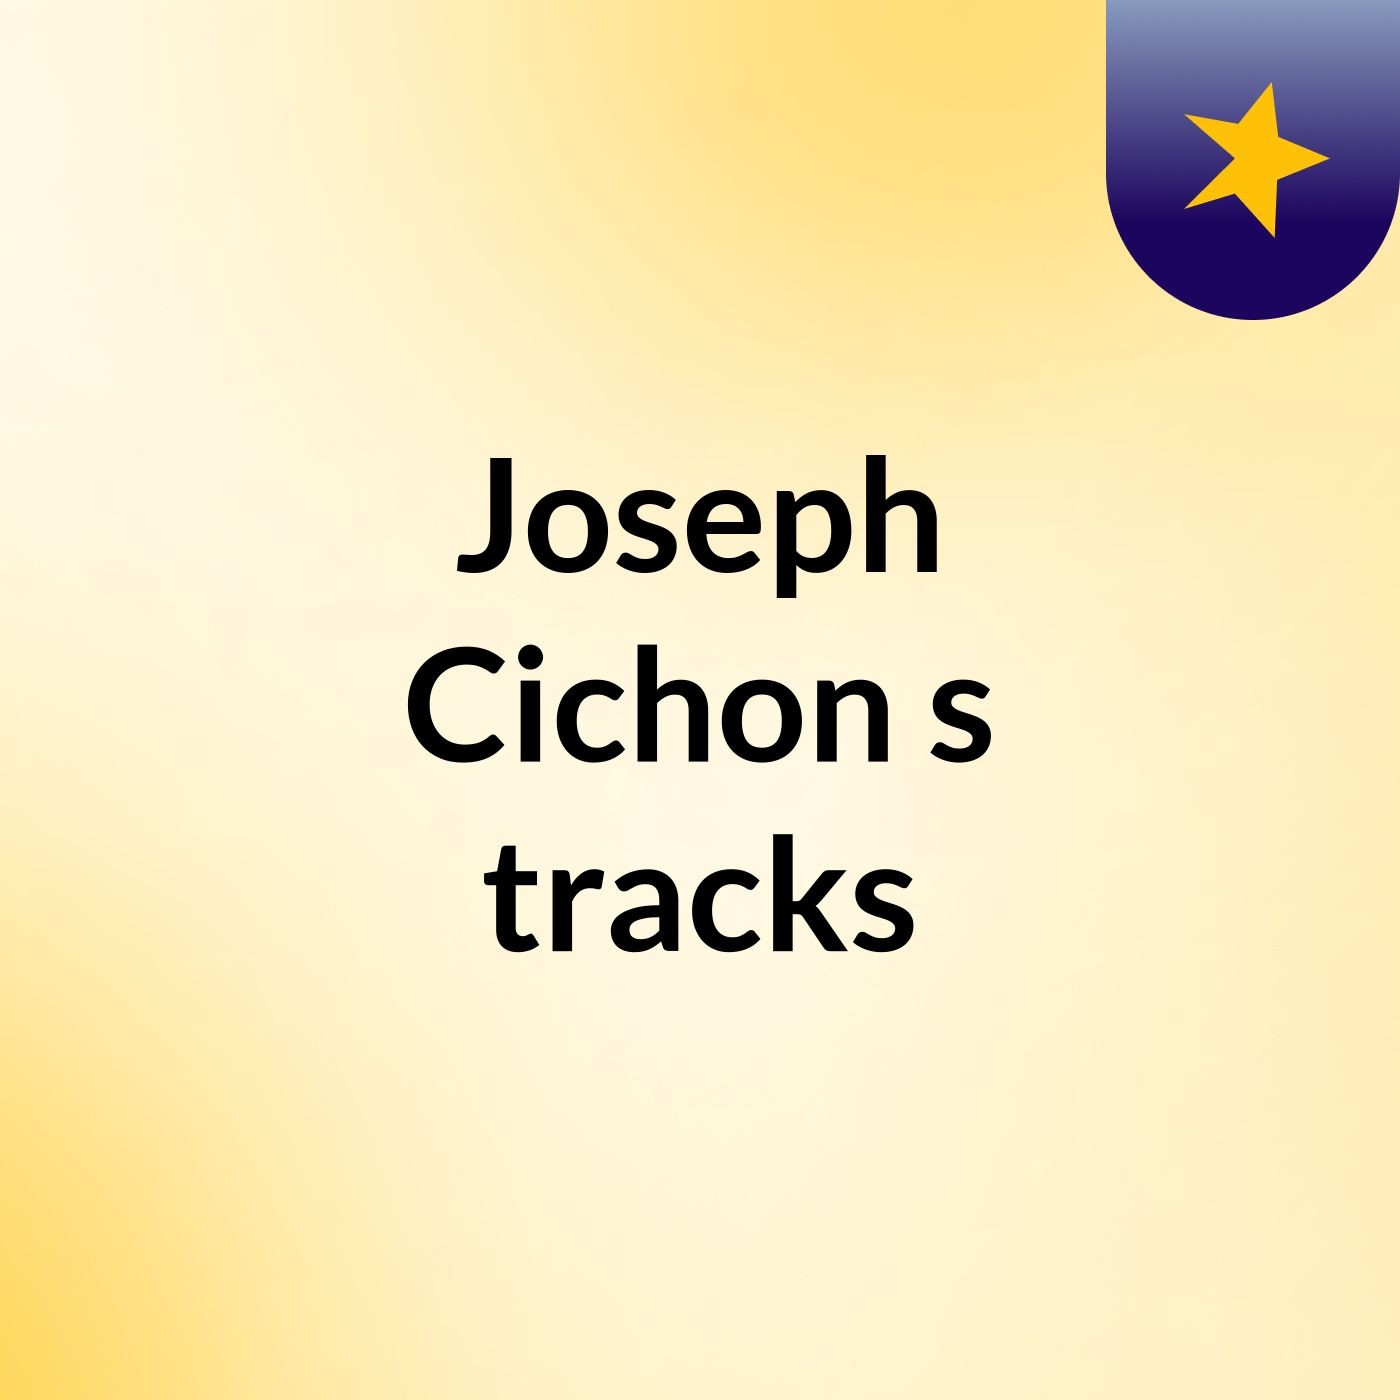 Joseph Cichon's tracks